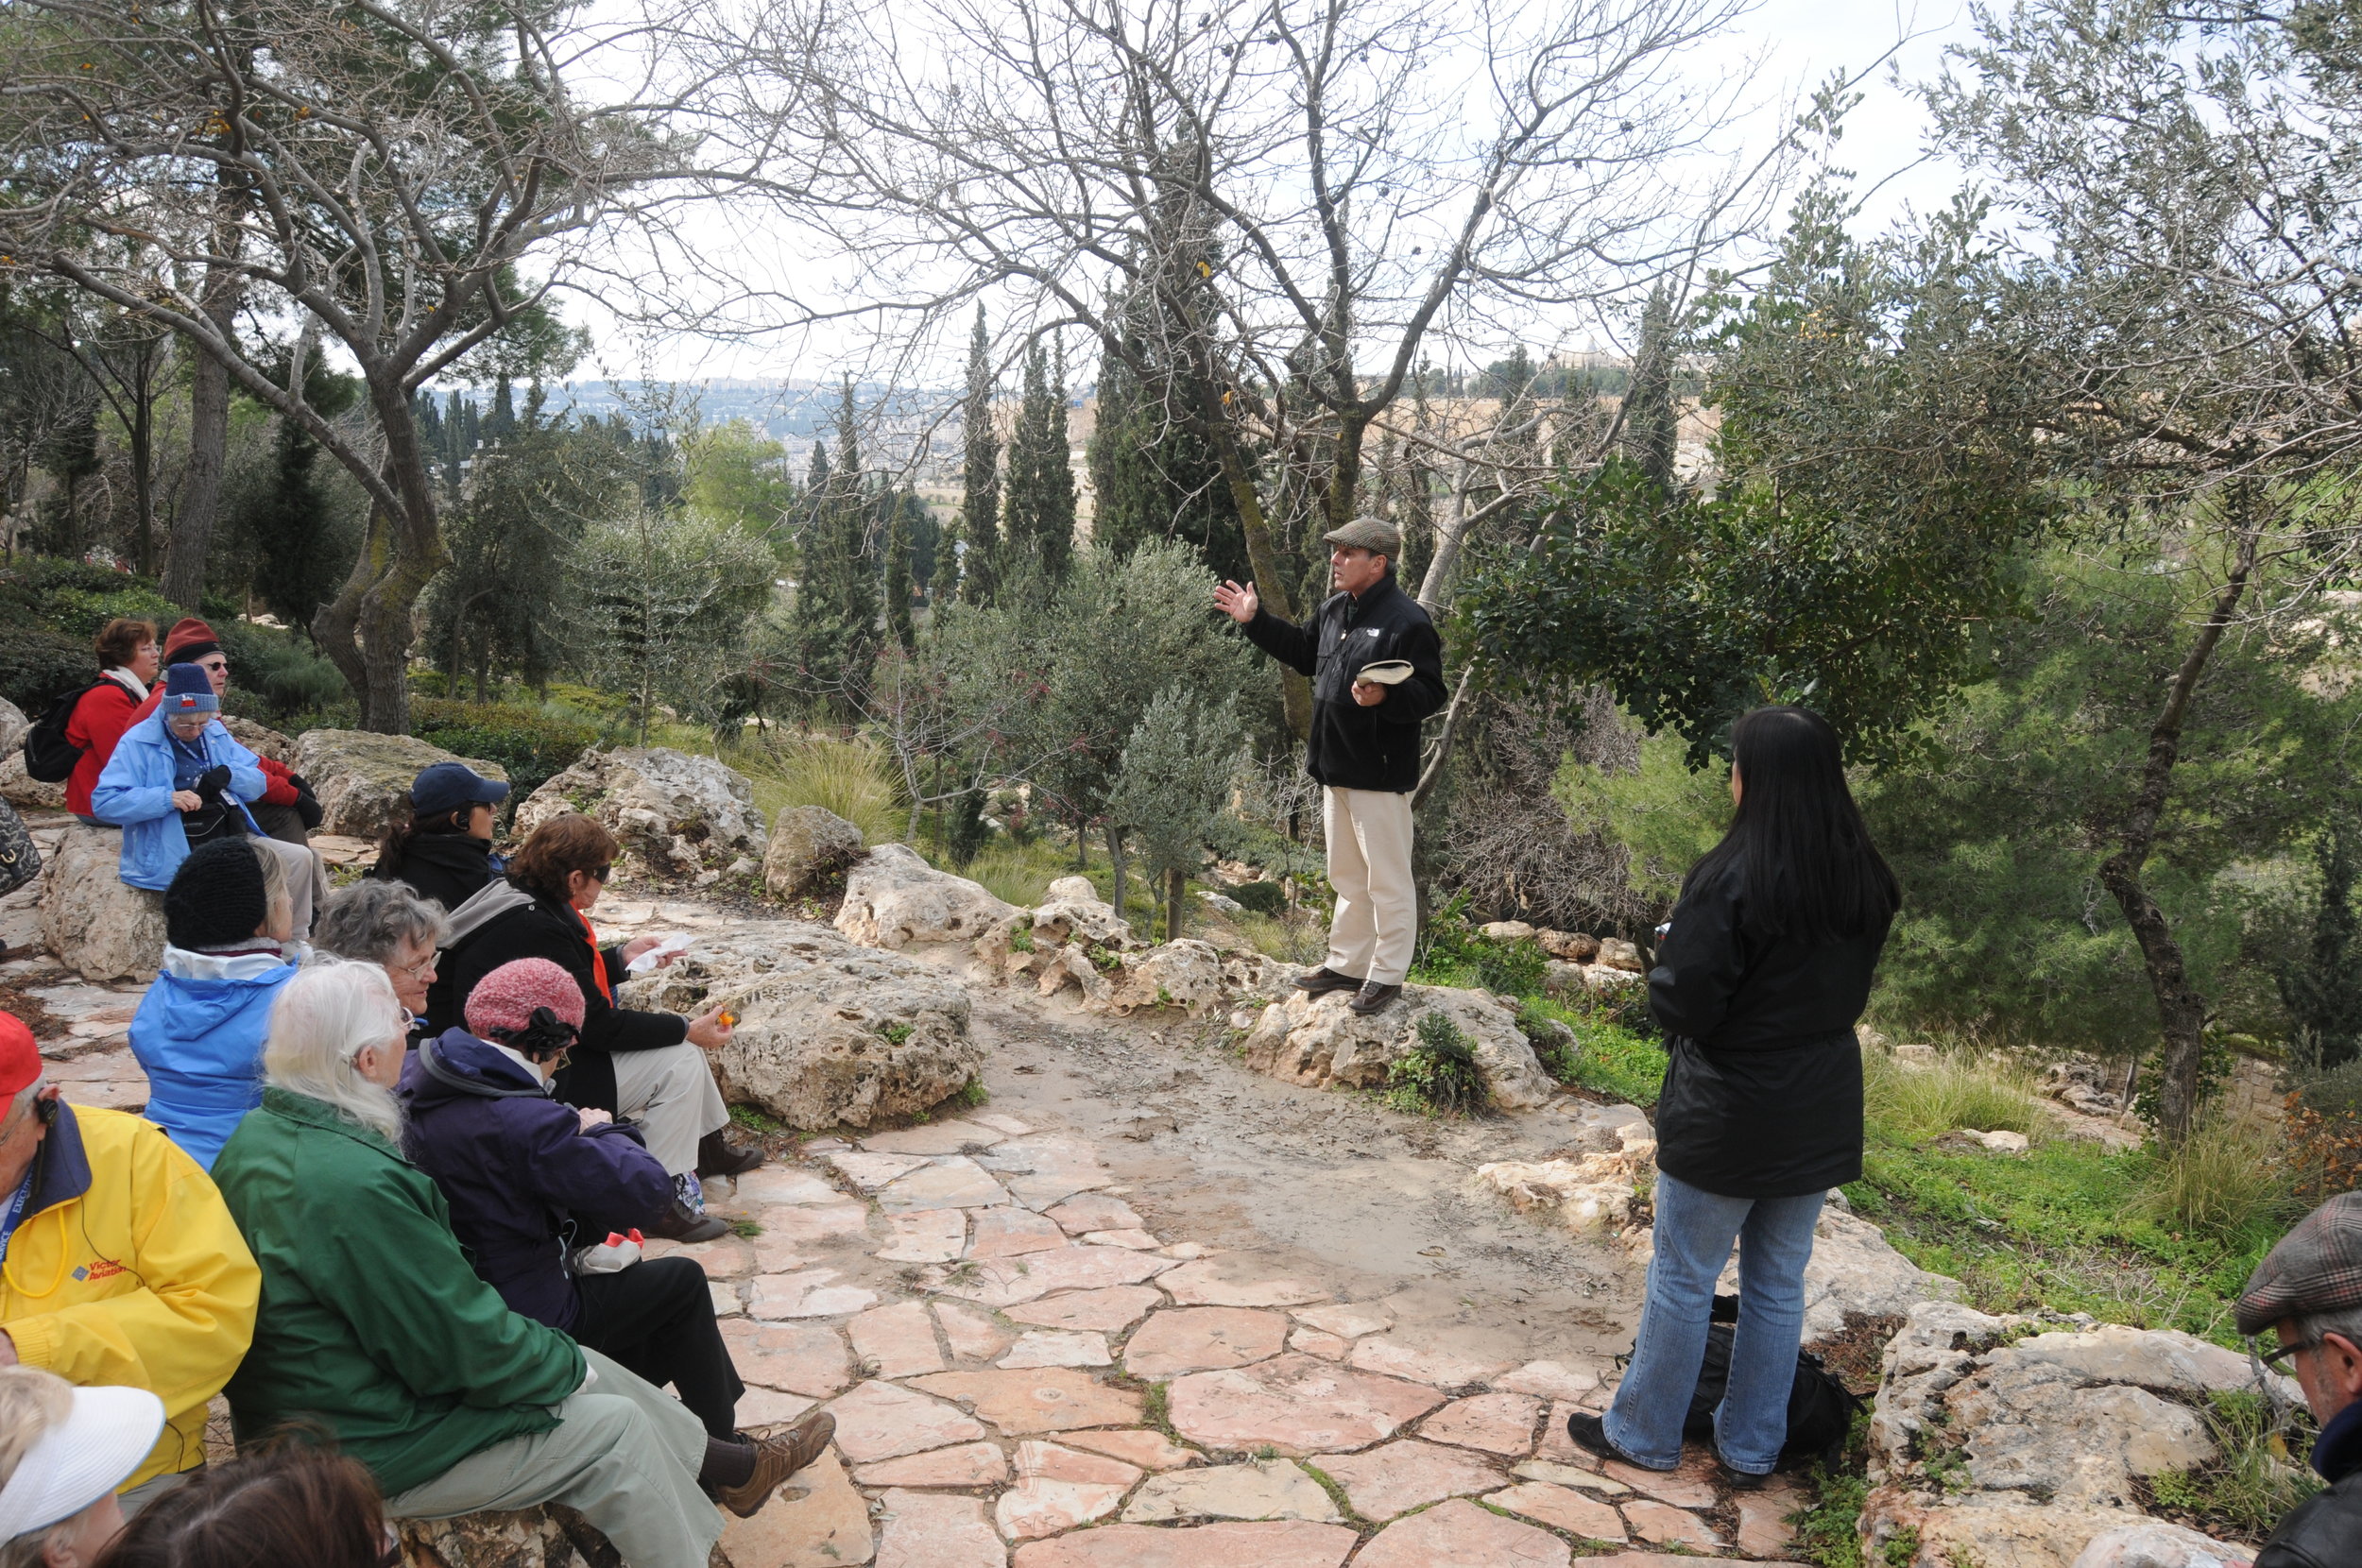   Dr. Creasy teaches in the Garden of Gethsemane.  